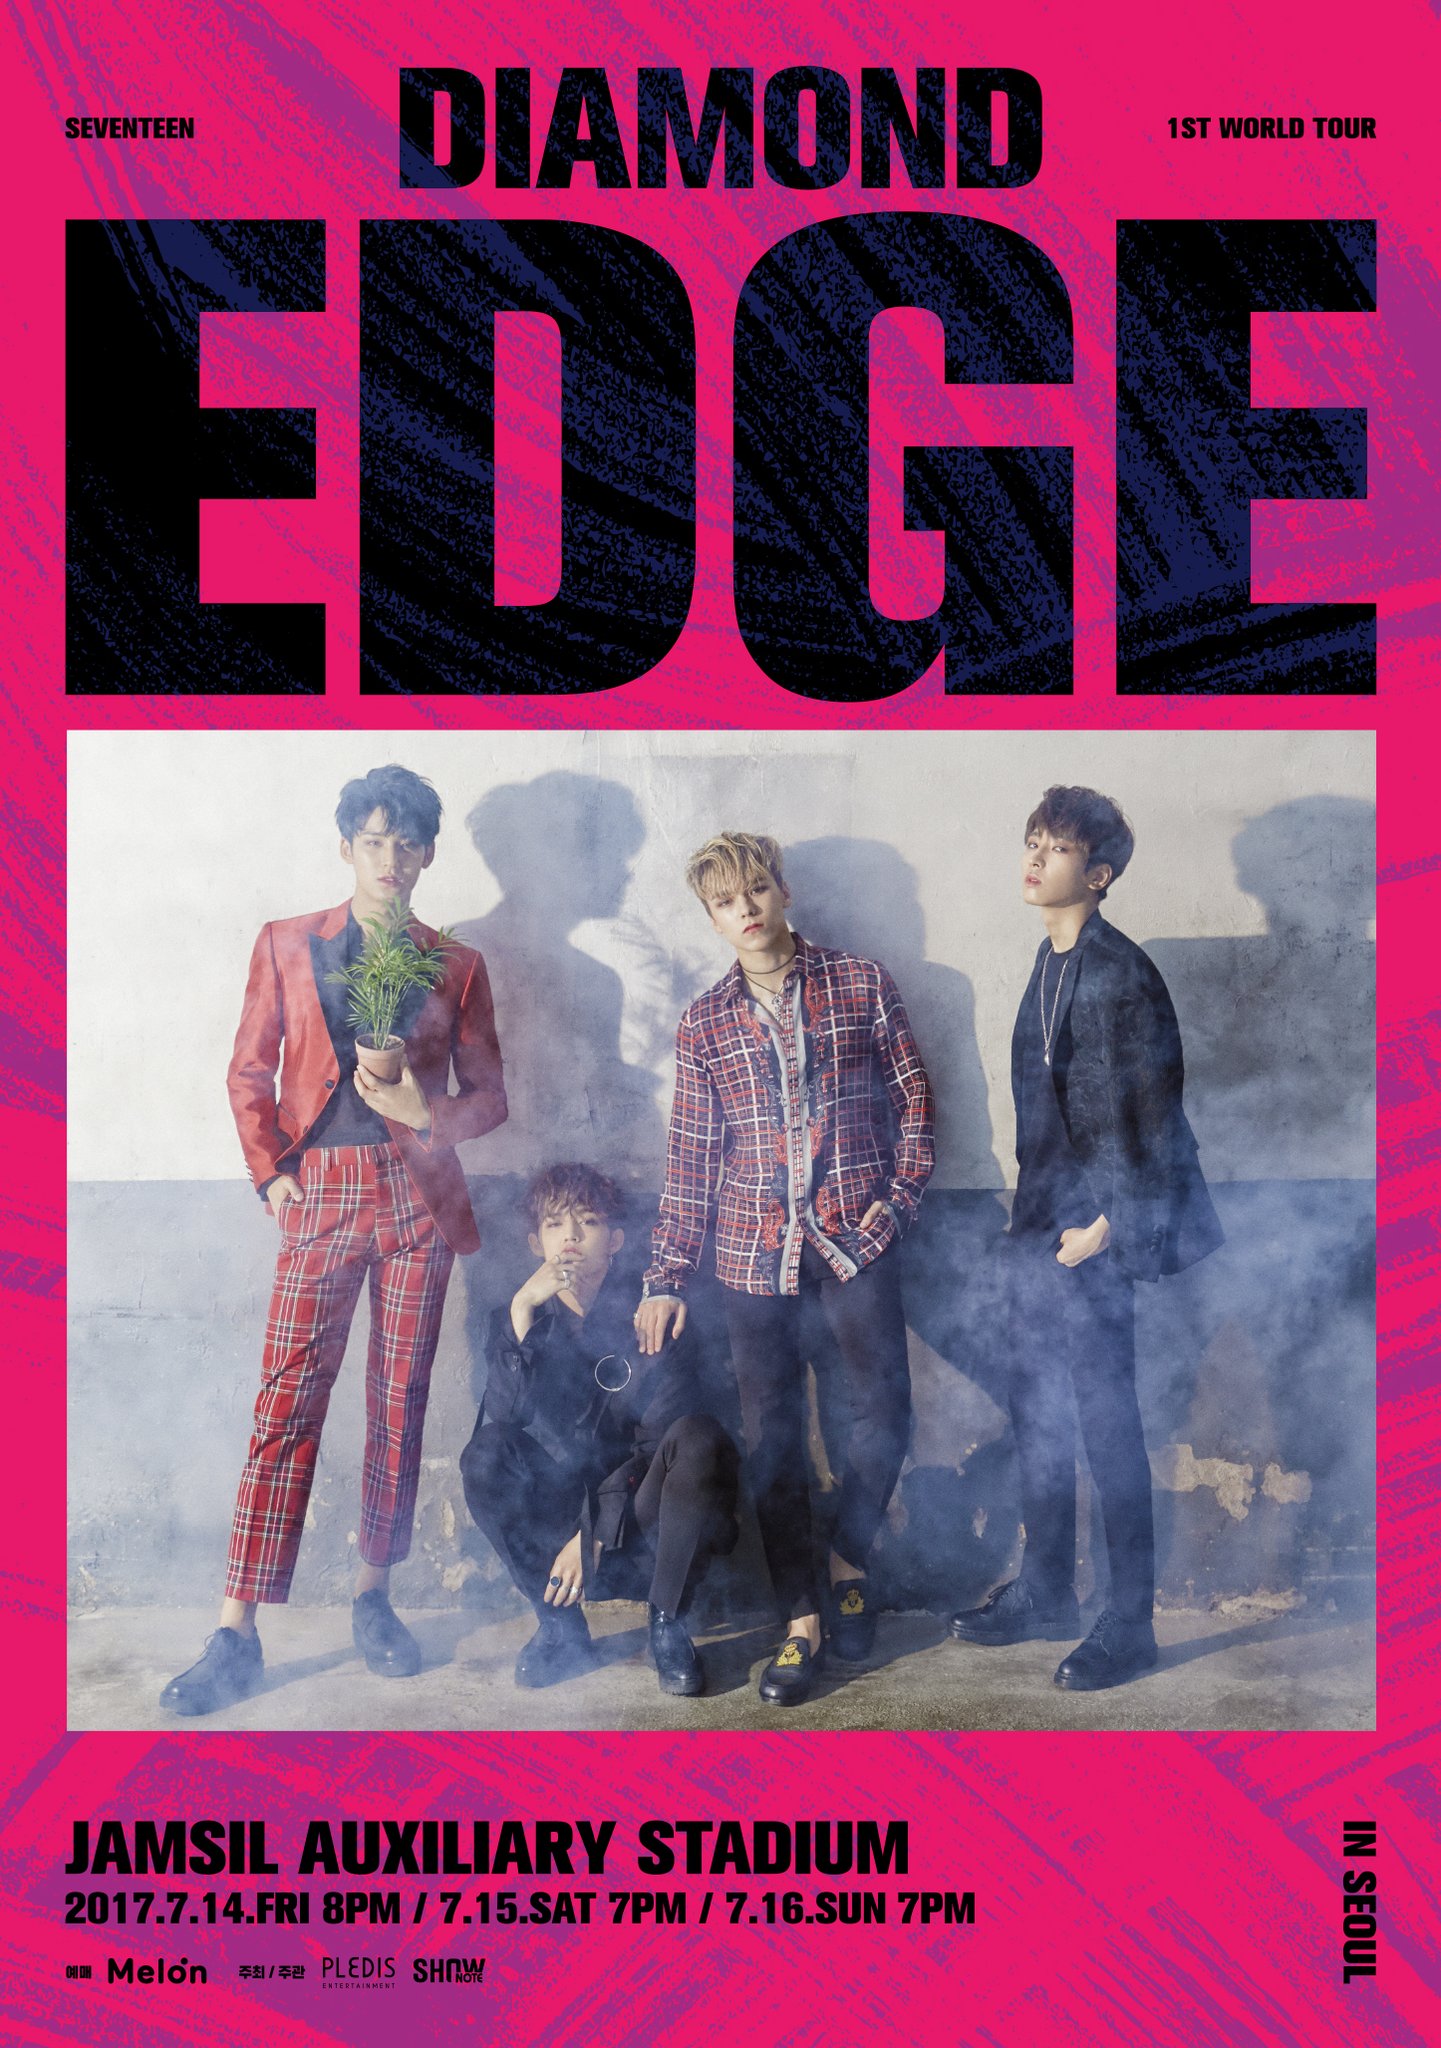 SEVENTEEN DIAMOND EDGE inソウル DVD